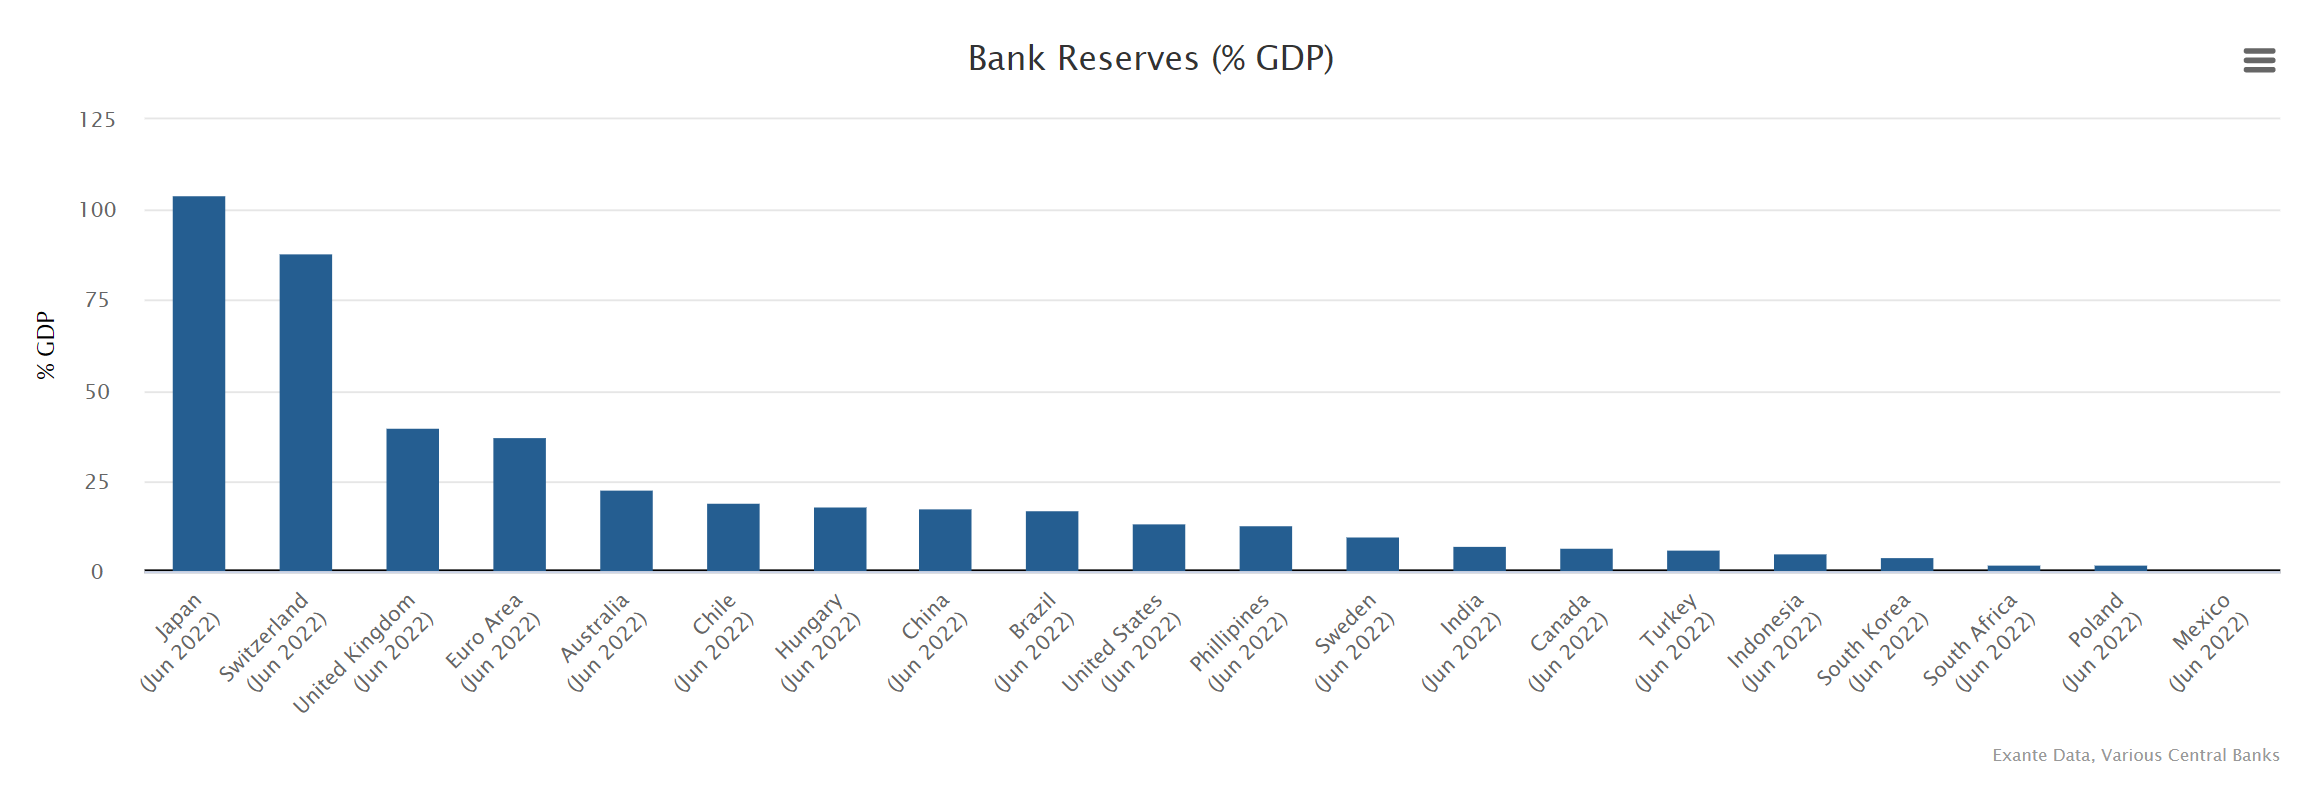 Bank reserves of central banks